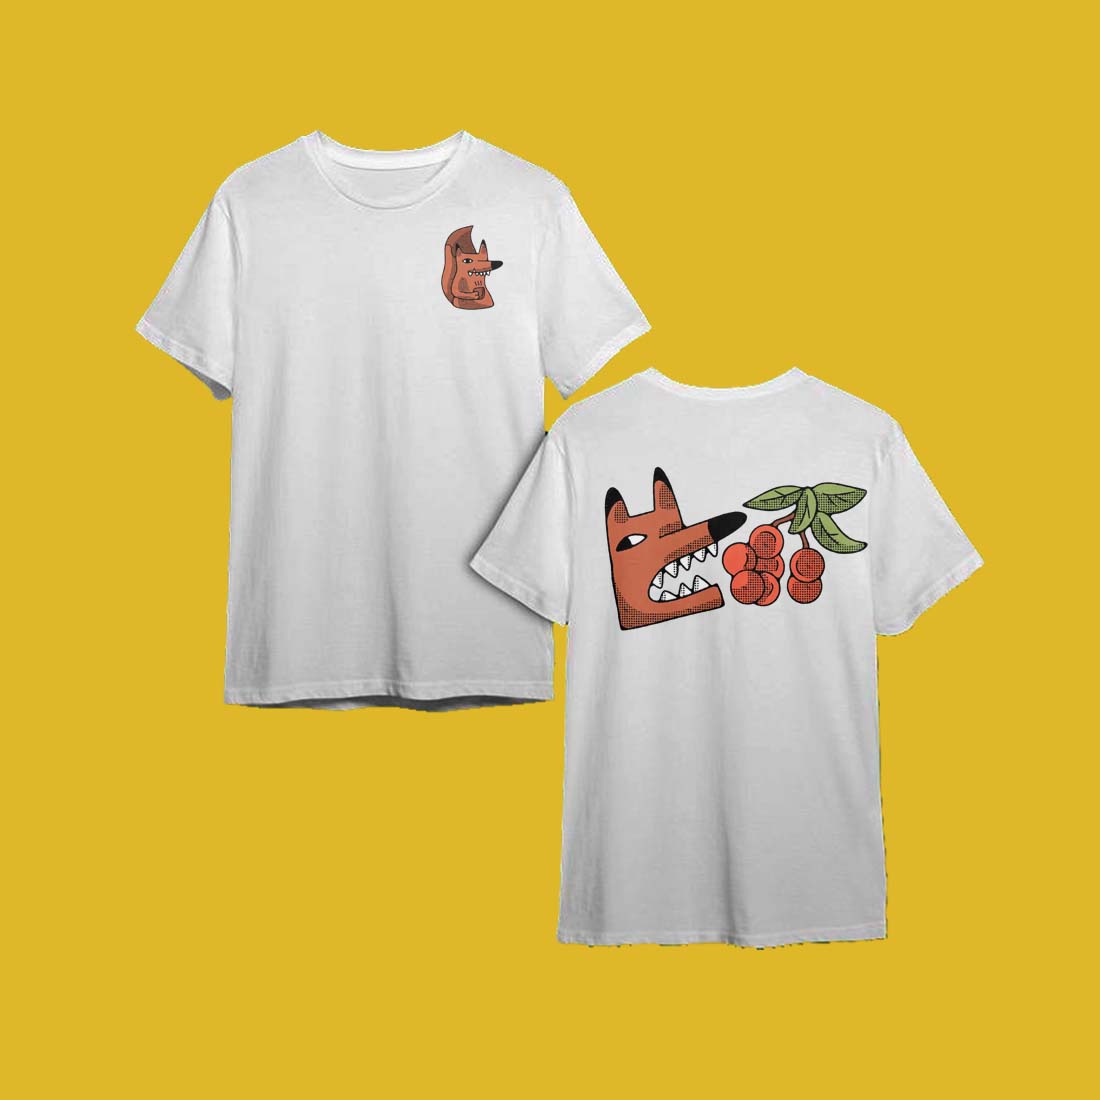 Red Fox Doodles Clip Art T-shirt Print Example.